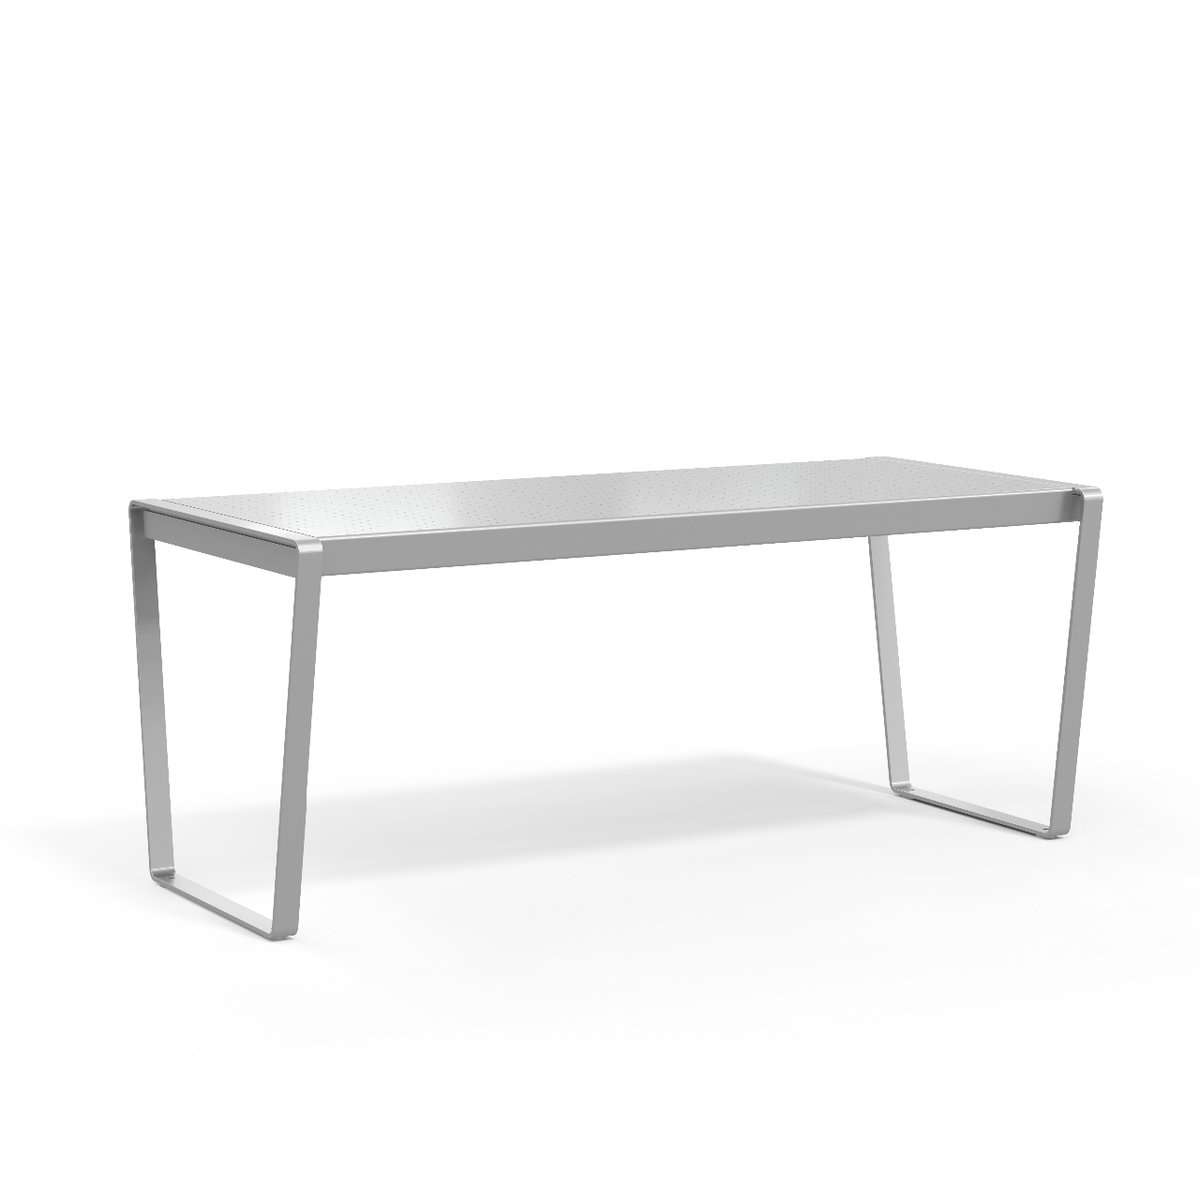 6' Table, steel Photo